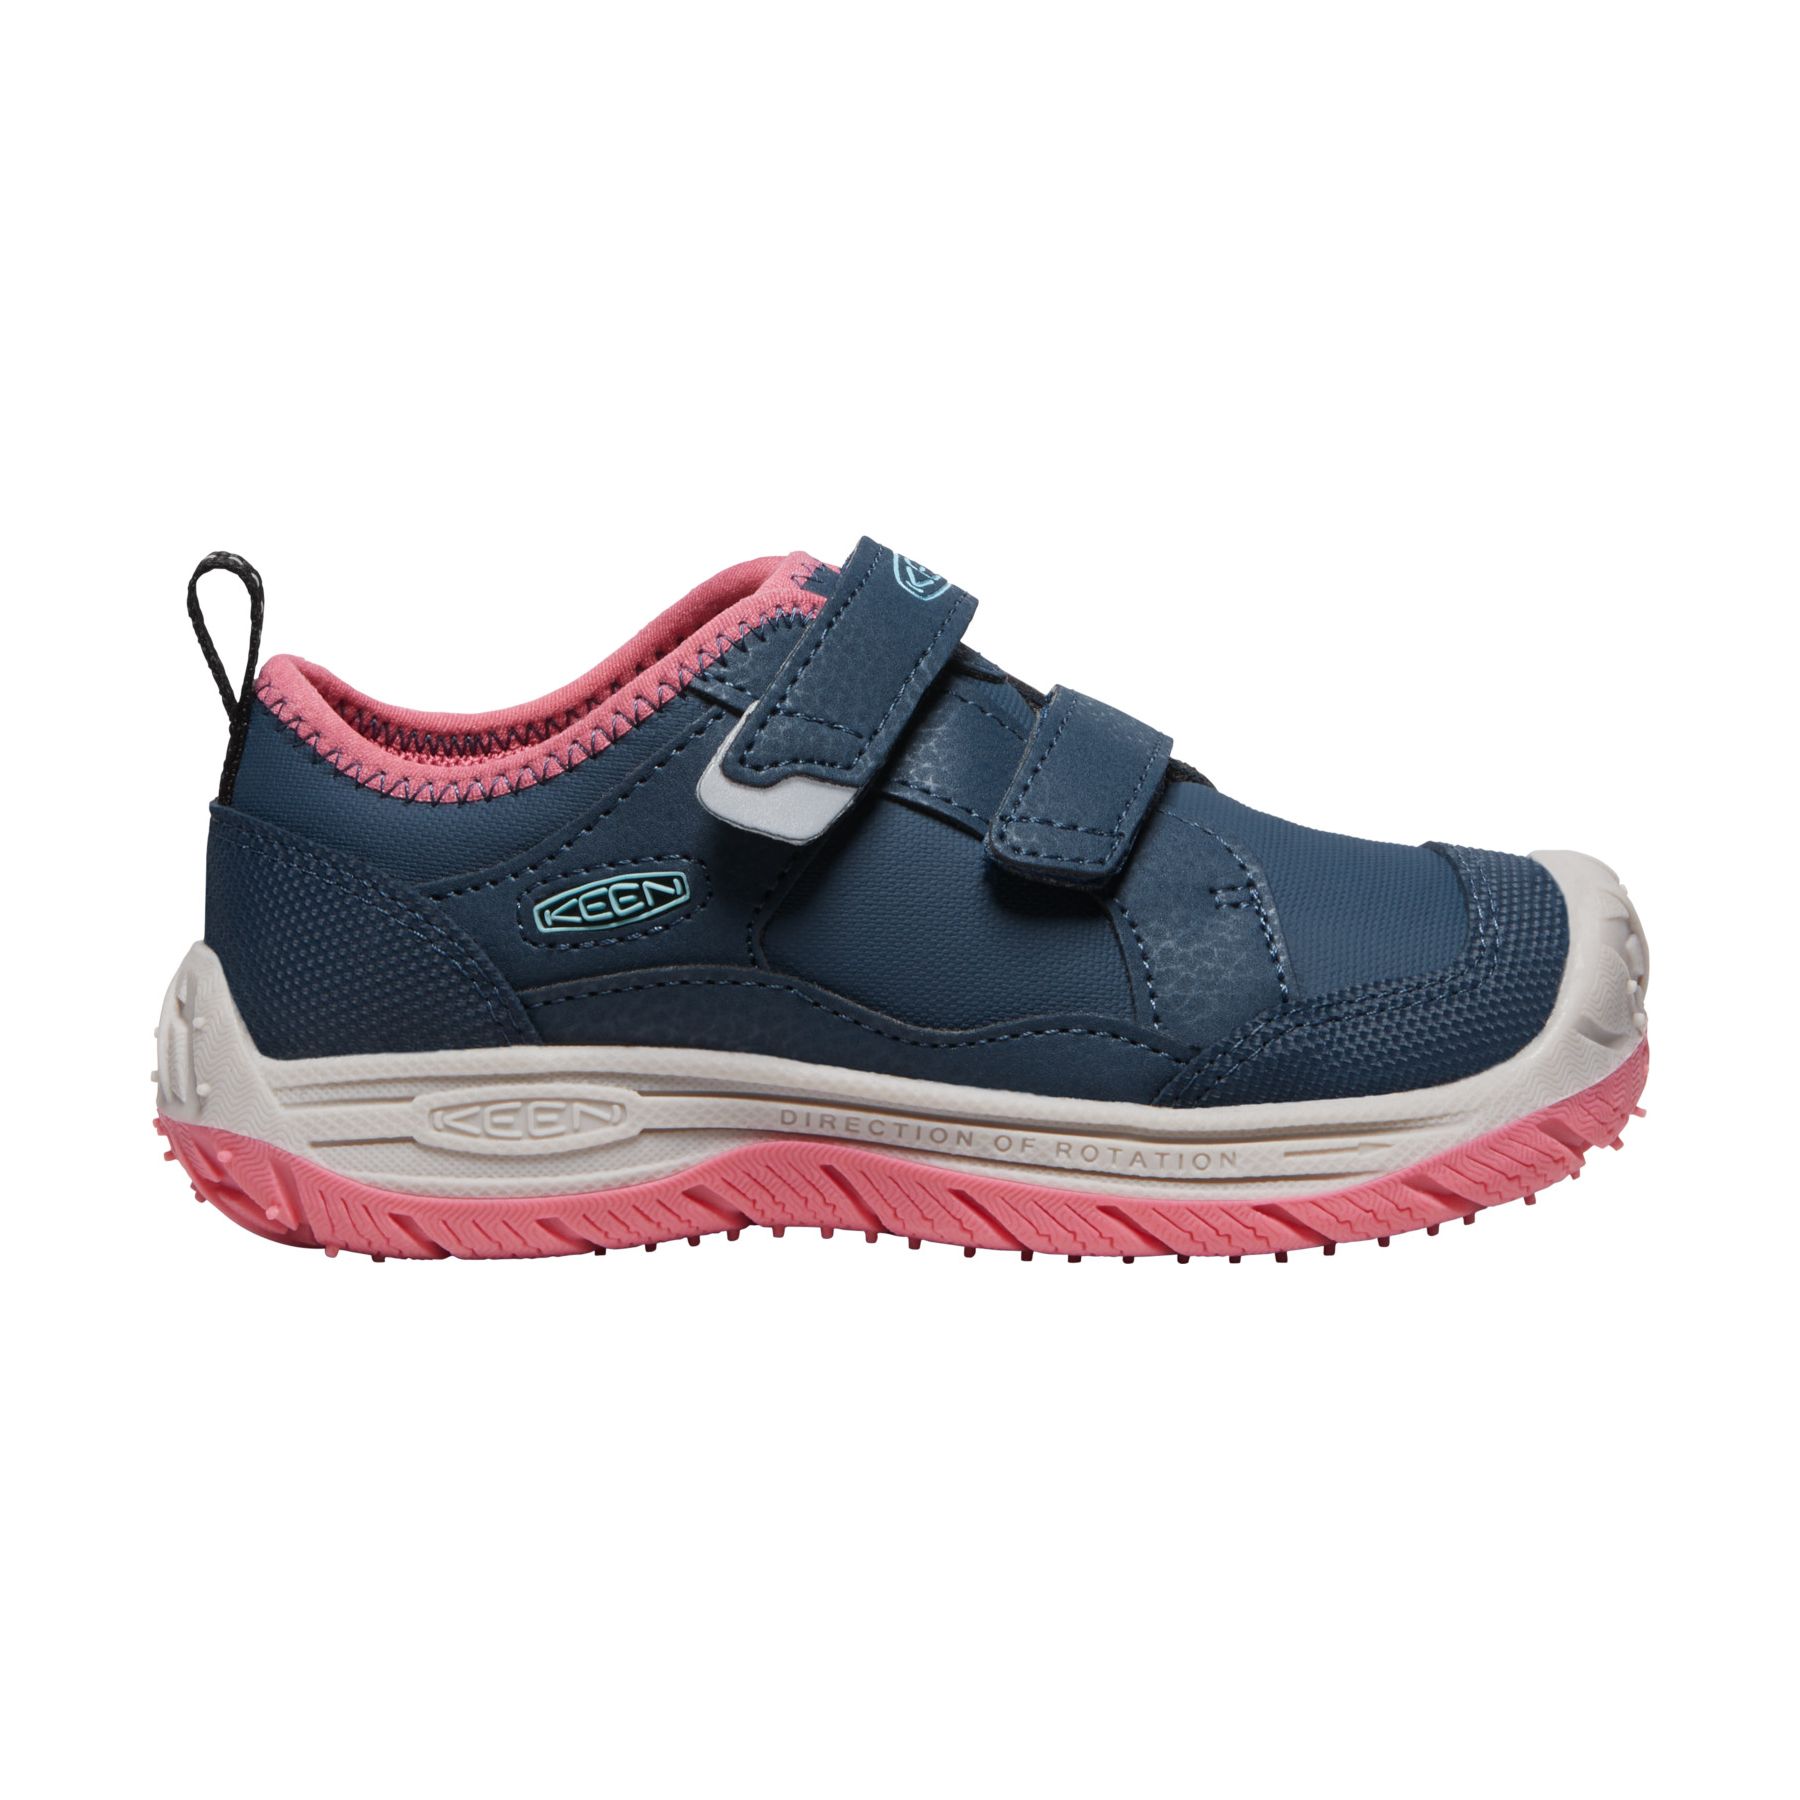 Sapatos Trekking Criança Speed Hound C Keen - azul-marino - 